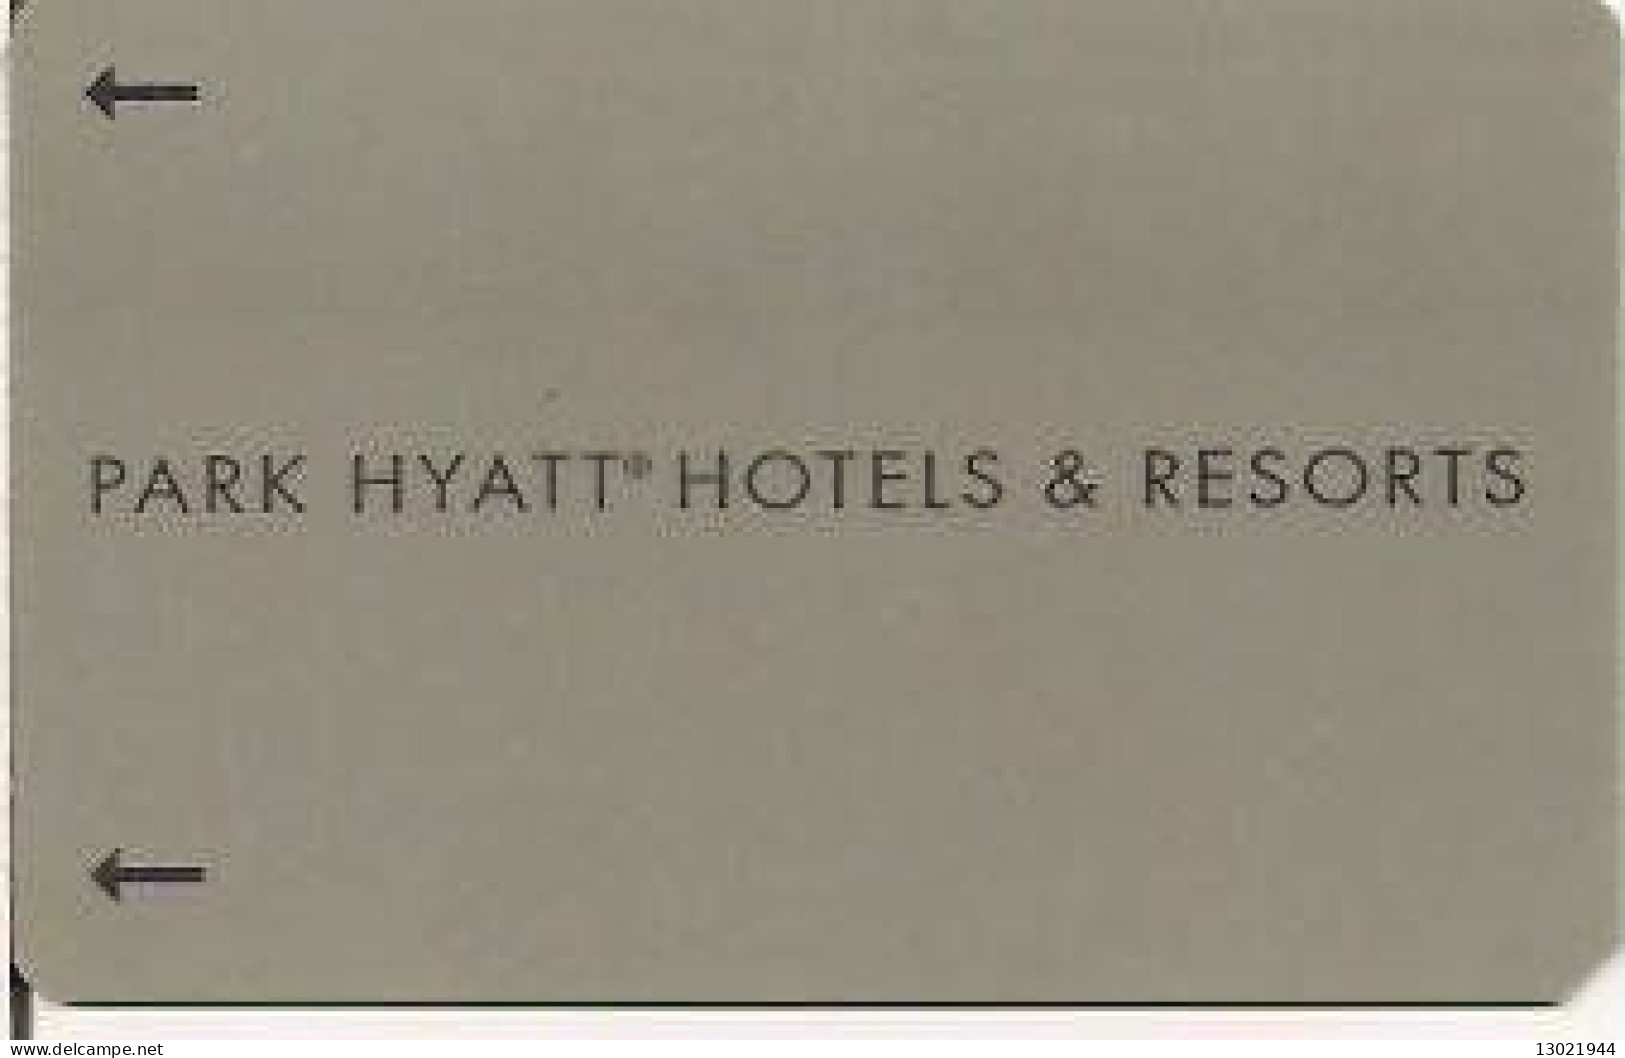 STATI UNITI  KEY HOTEL  Park Hyatt Hotels & Resorts - Hotelsleutels (kaarten)